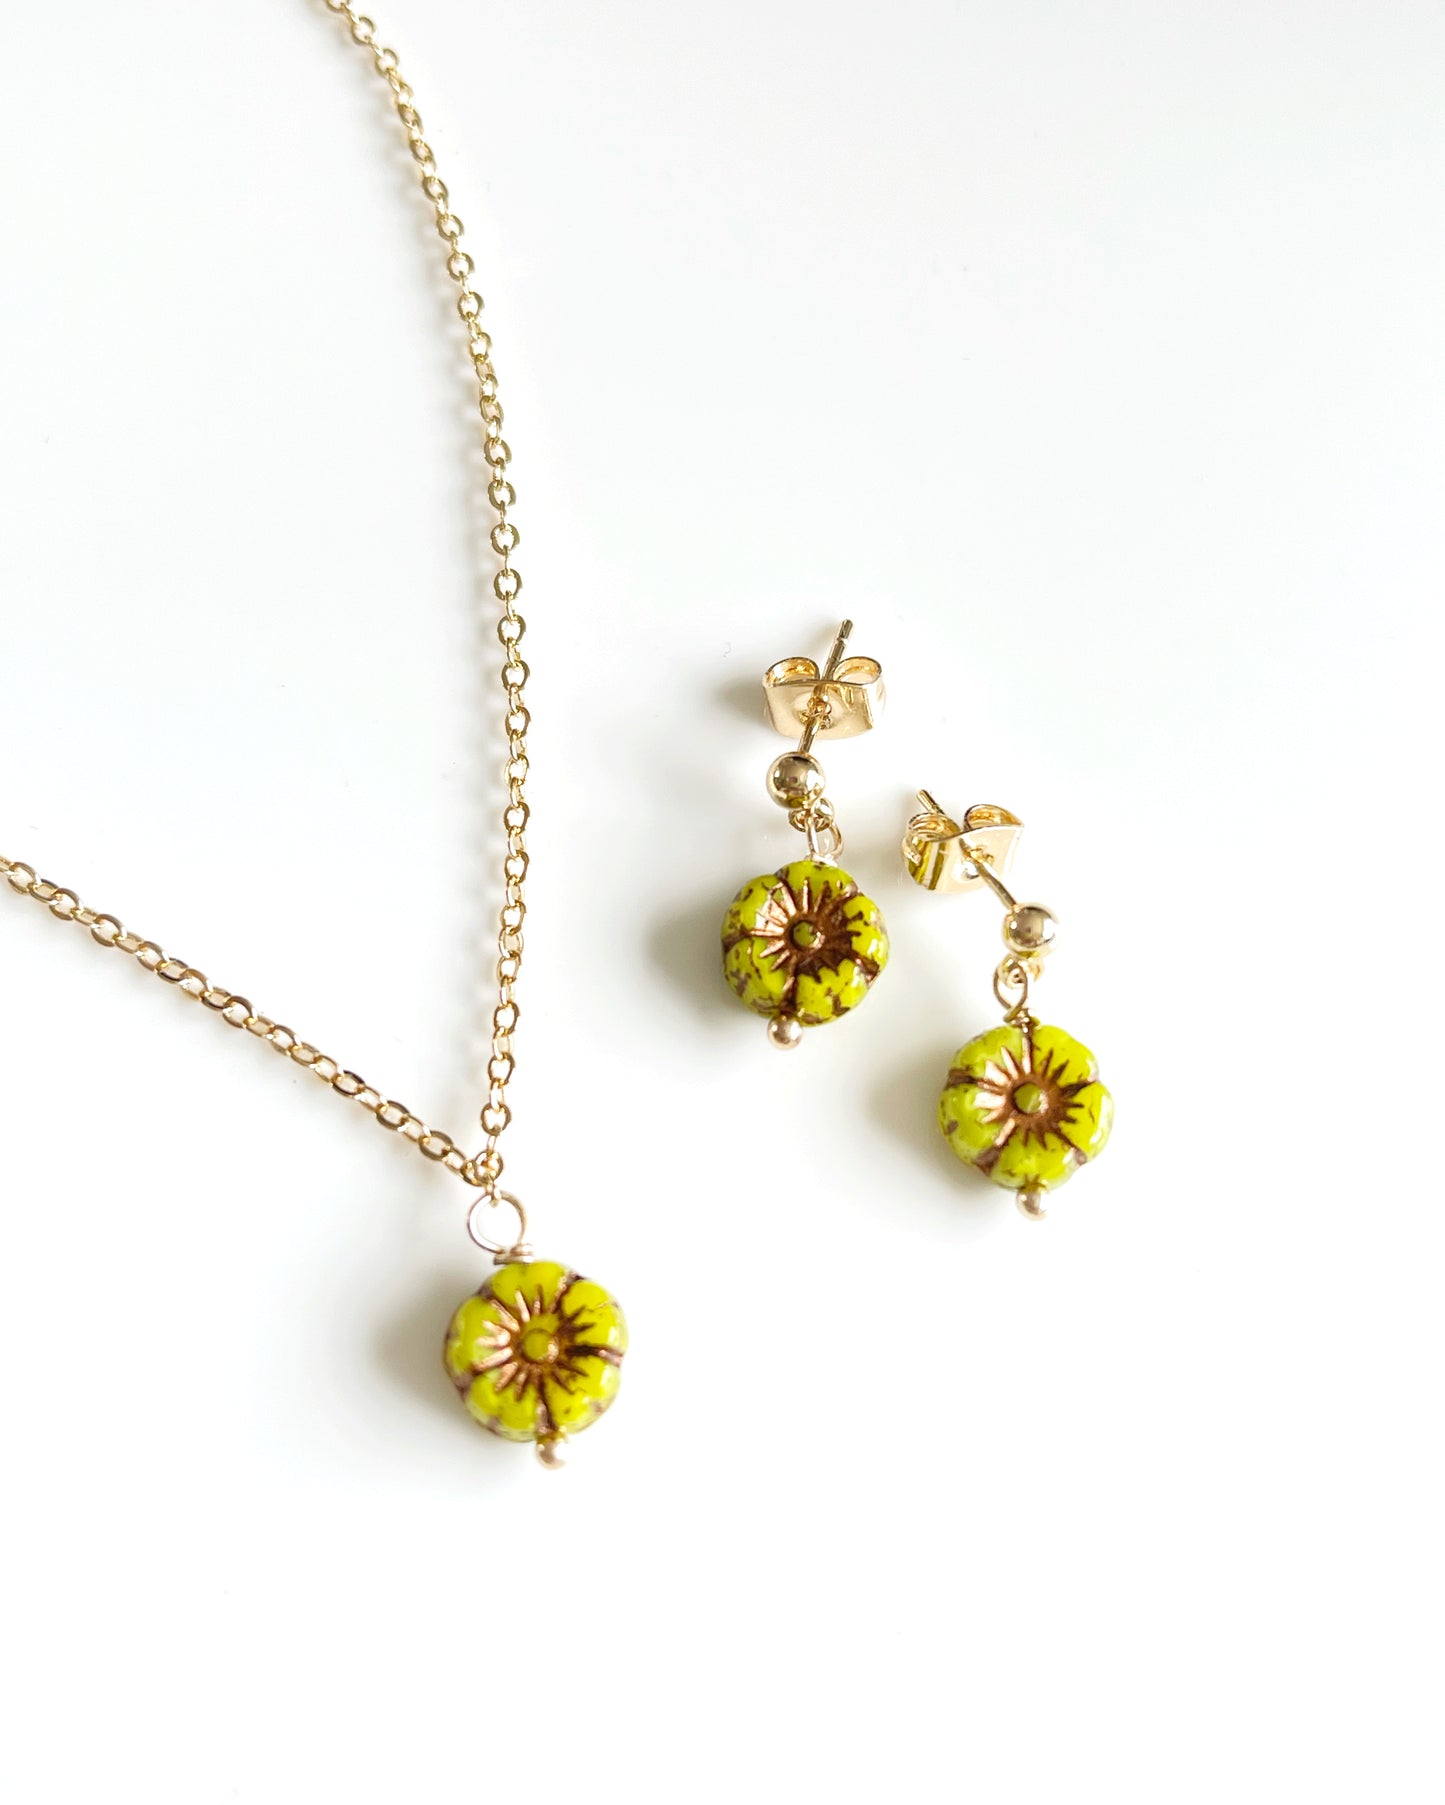 Mini sakura necklace and earrings set in avocado